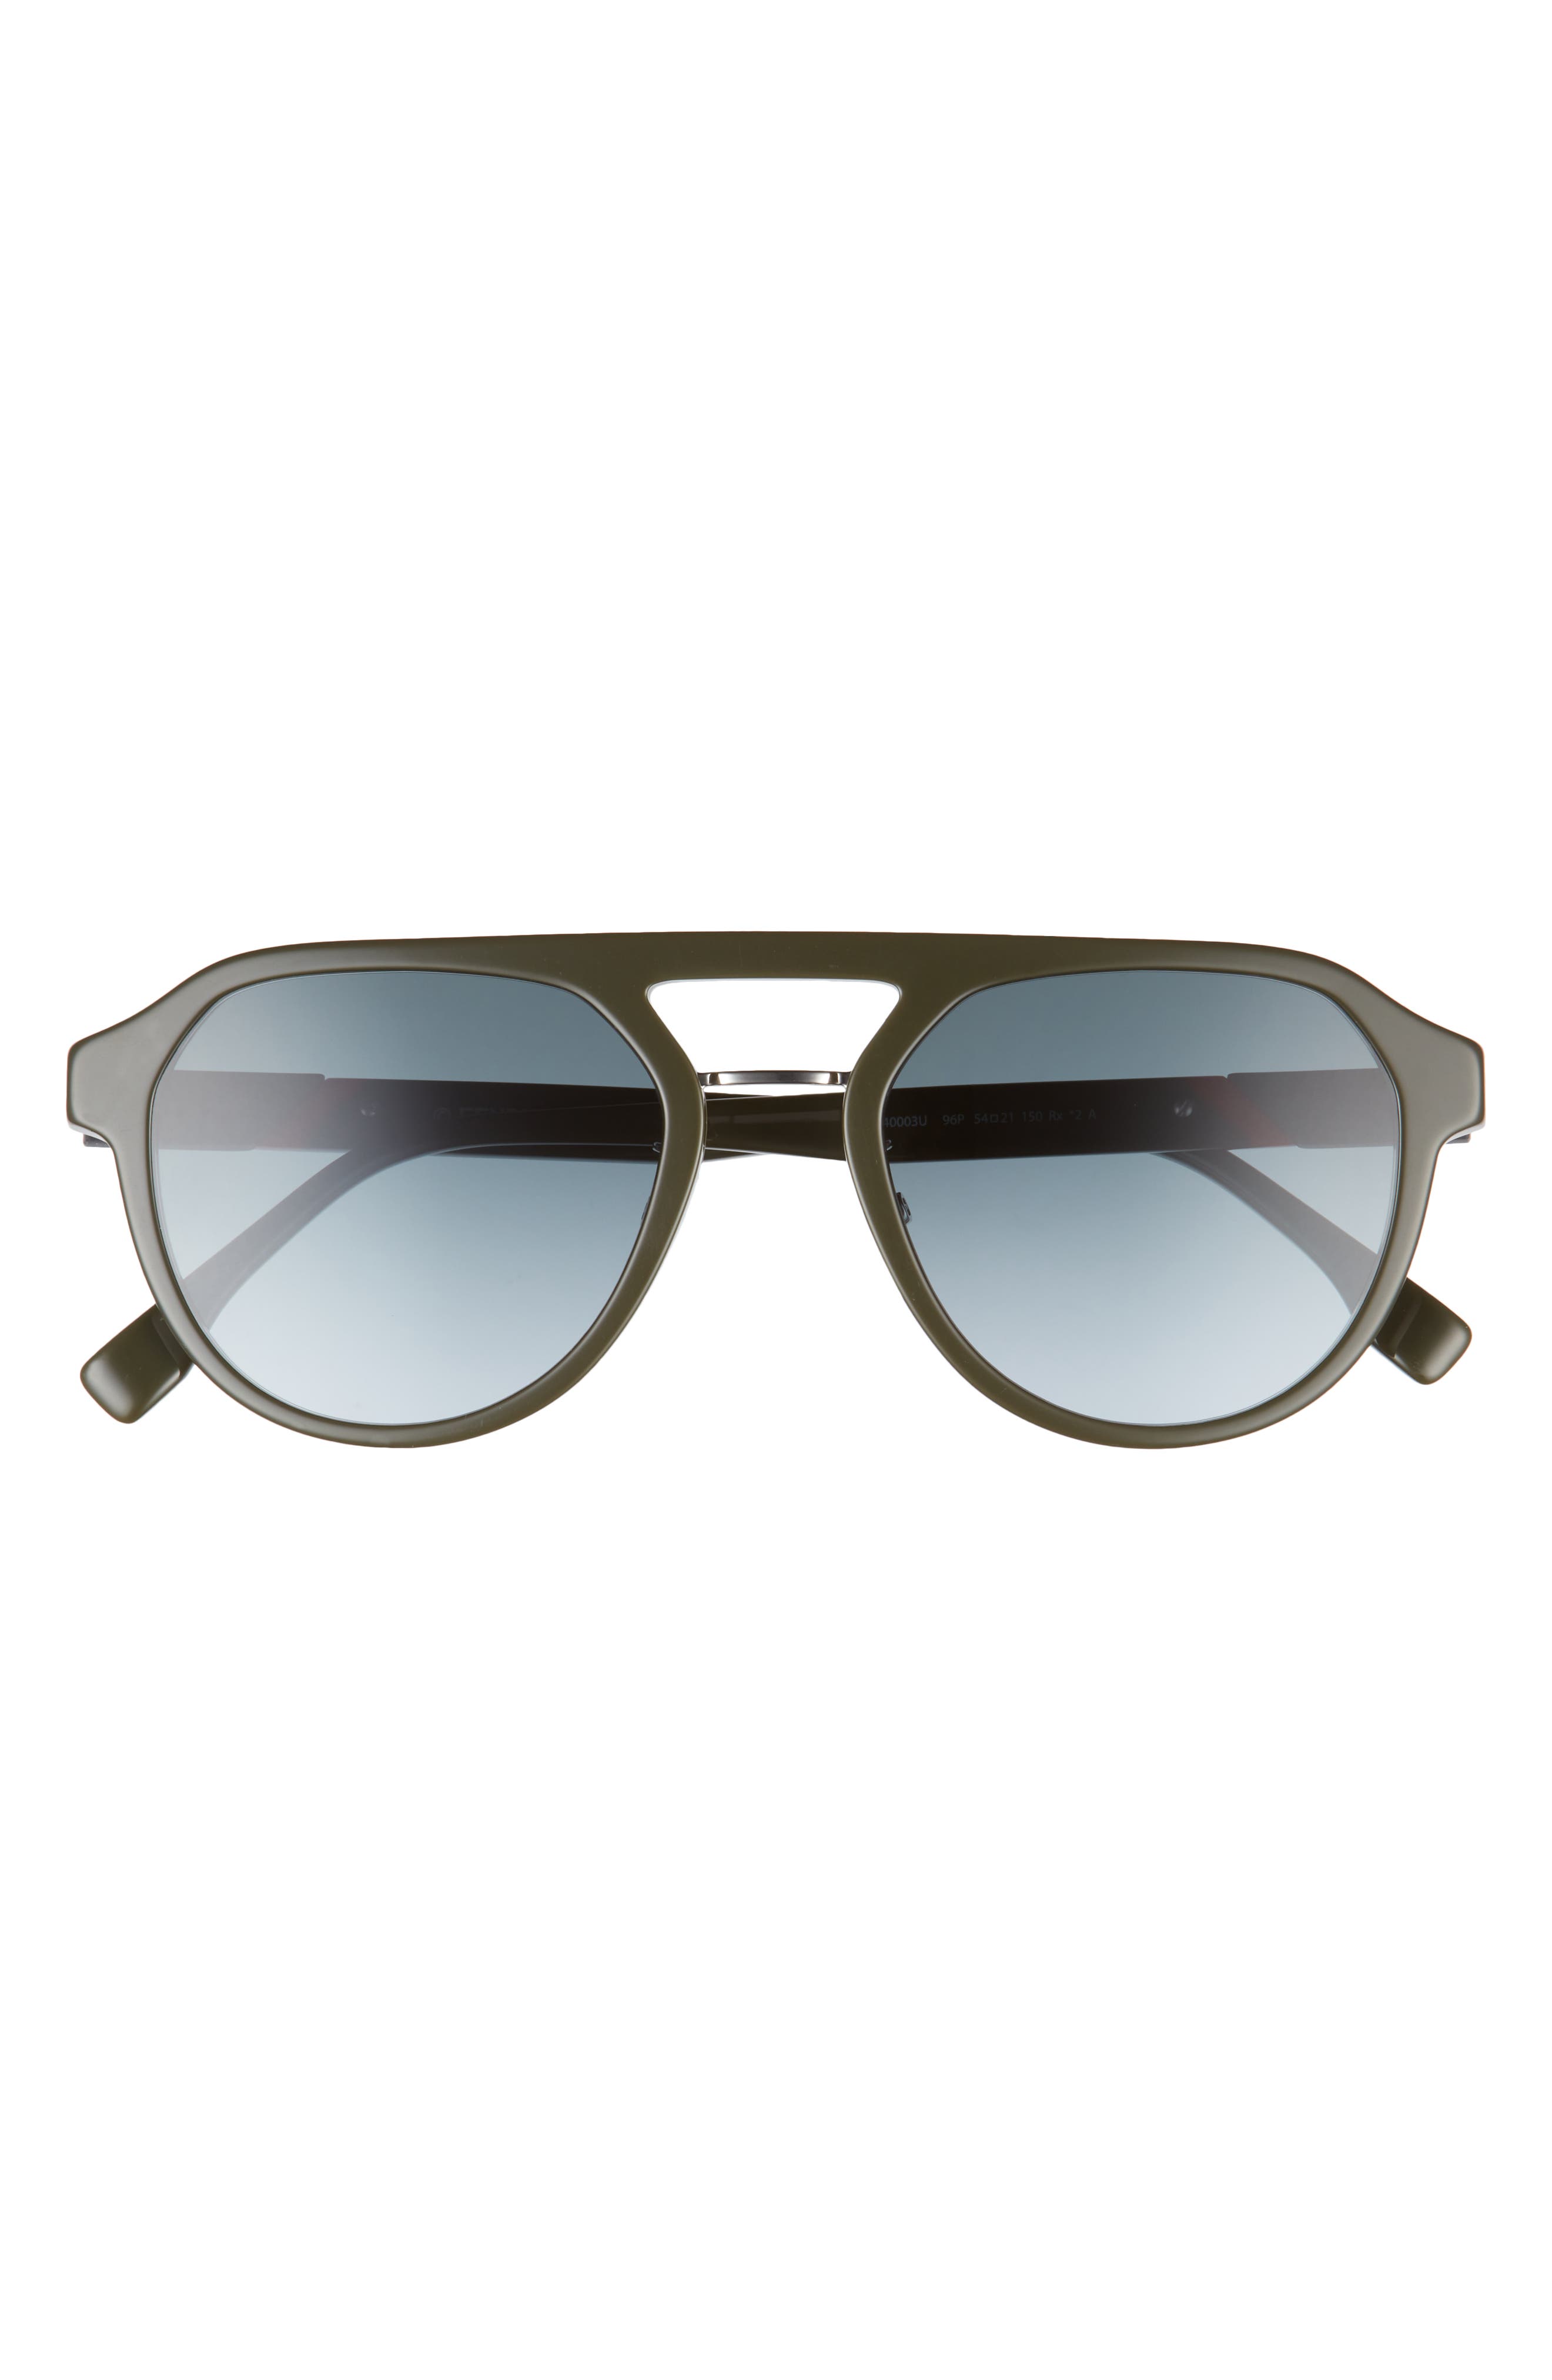 Fendi 54mm Gradient Navigator Sunglasses in Shiny Dark Green /Gradient at Nordstrom